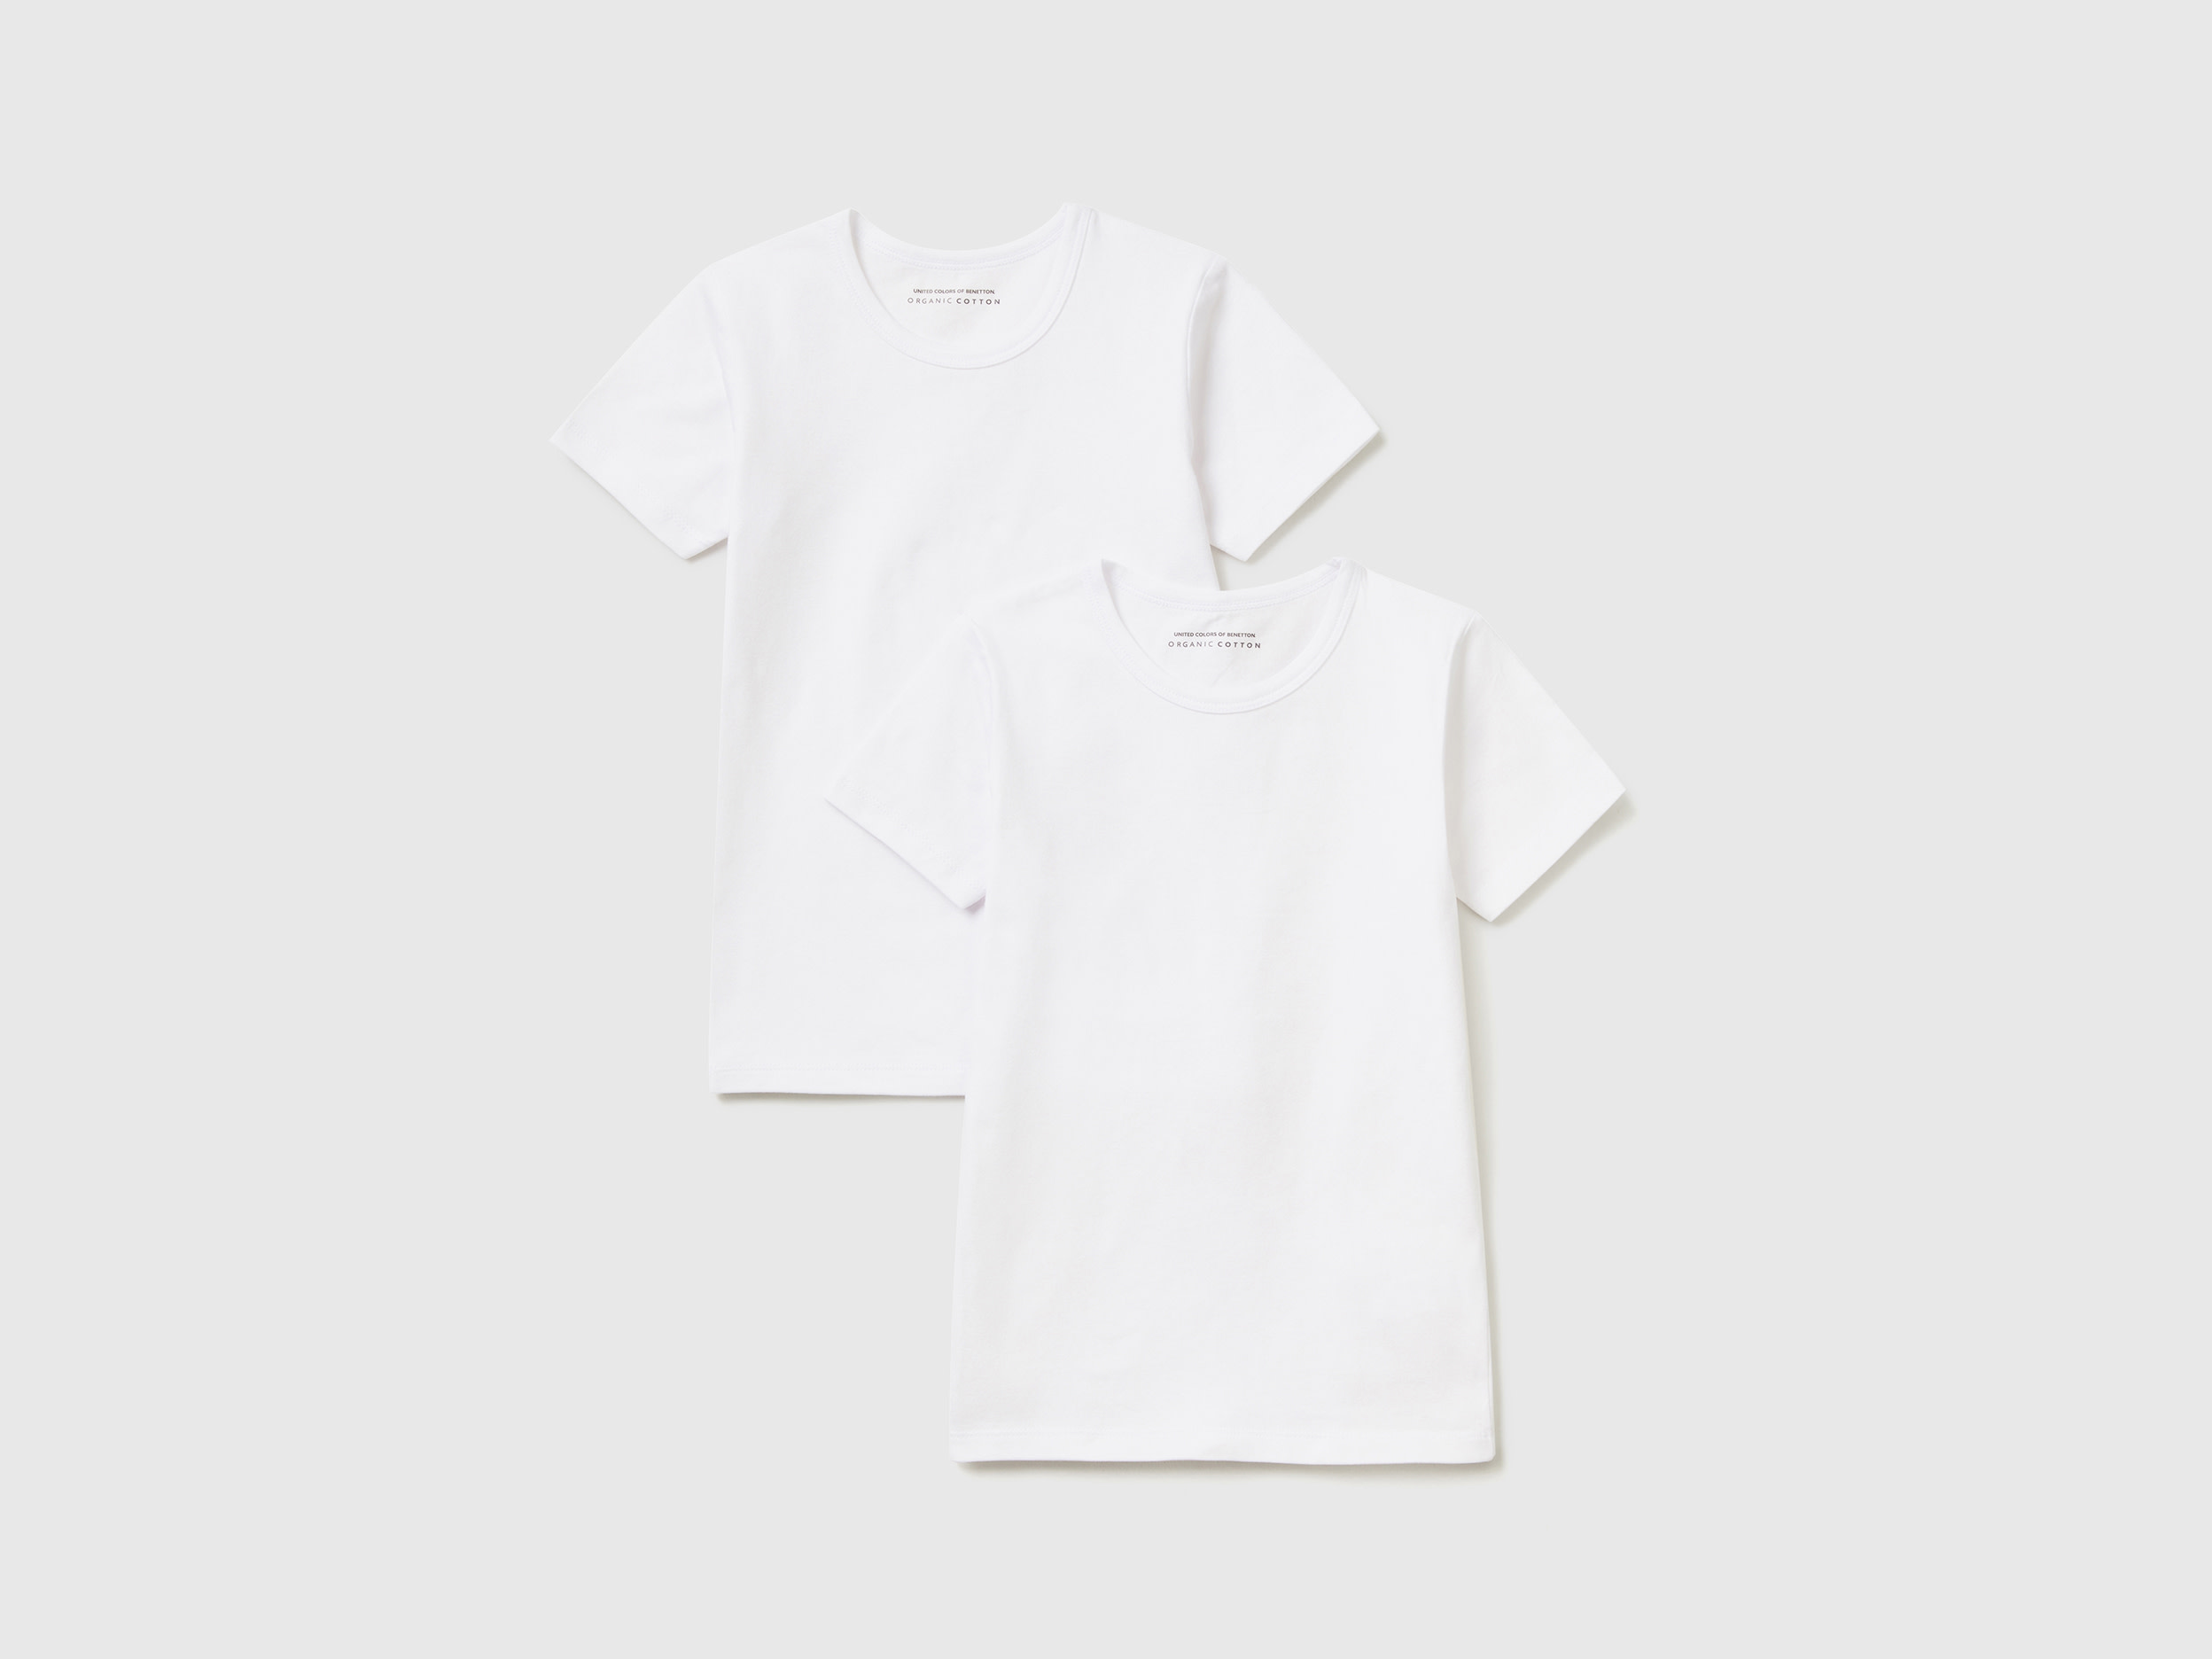 Image of Benetton, Two Stretch Organic Cotton T-shirts, size 2XL, White, Kids